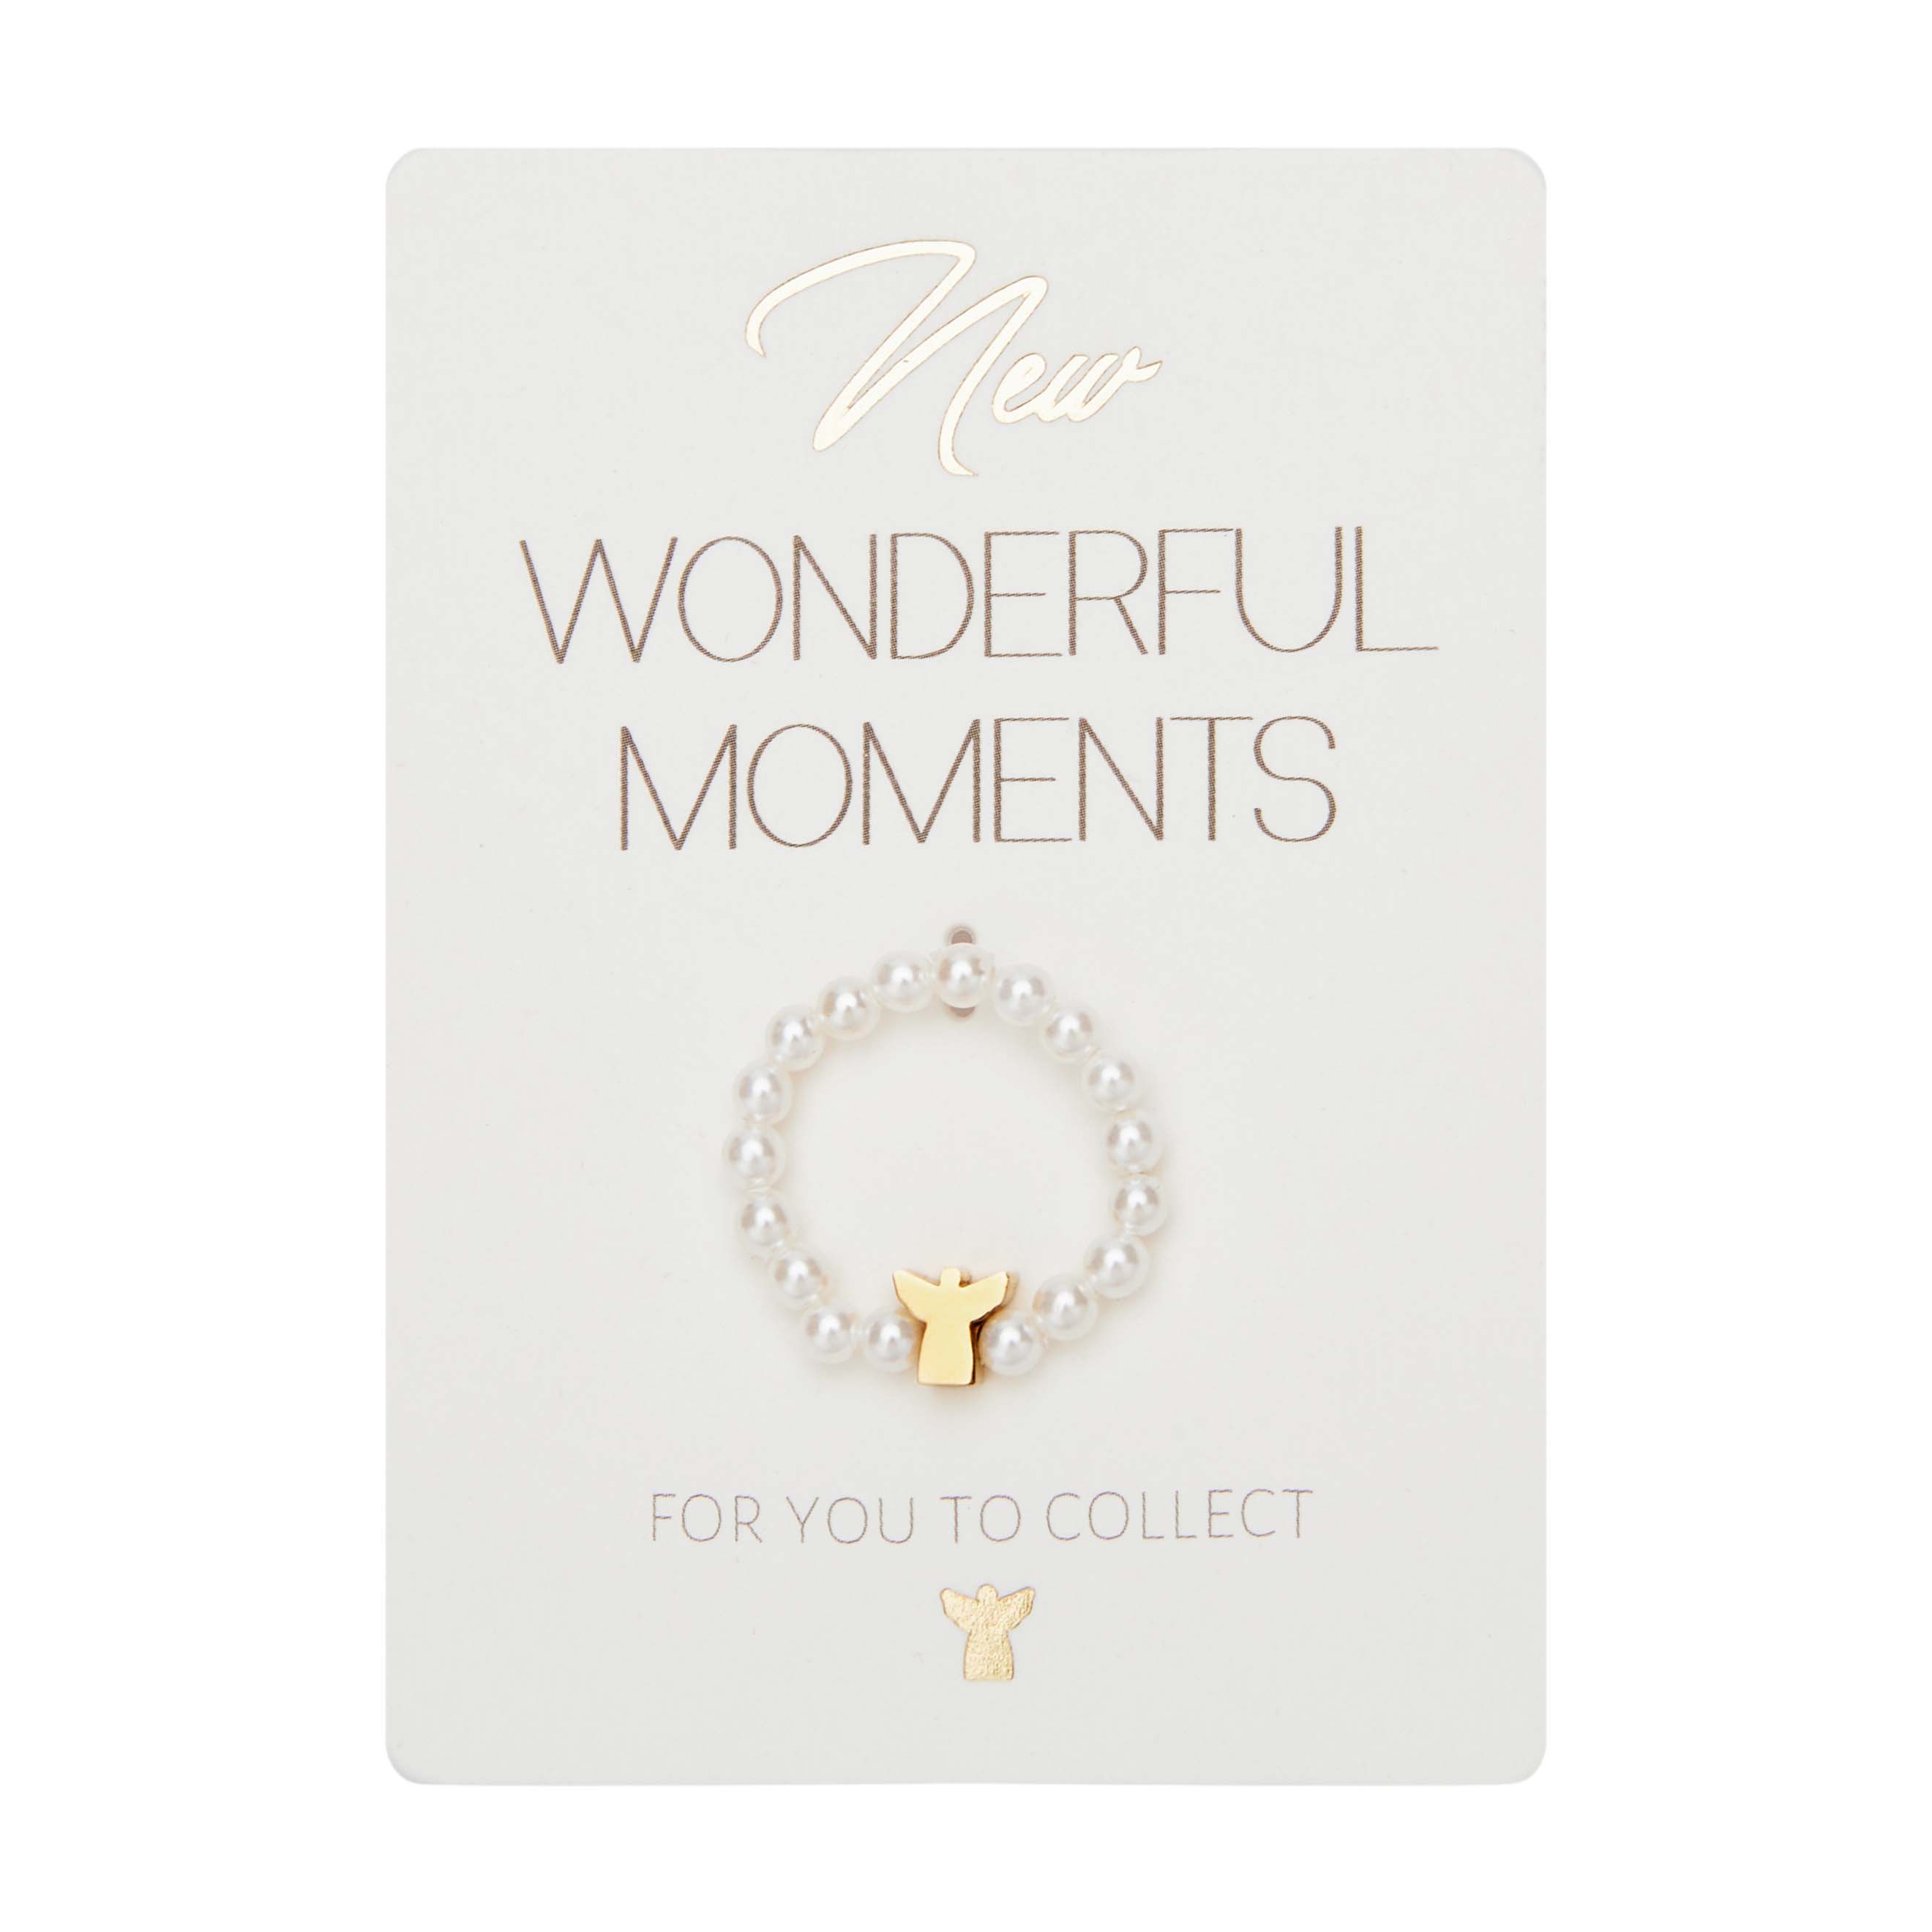 Ring - "New Wonderful Moments" - vergoldet - Schutzengel